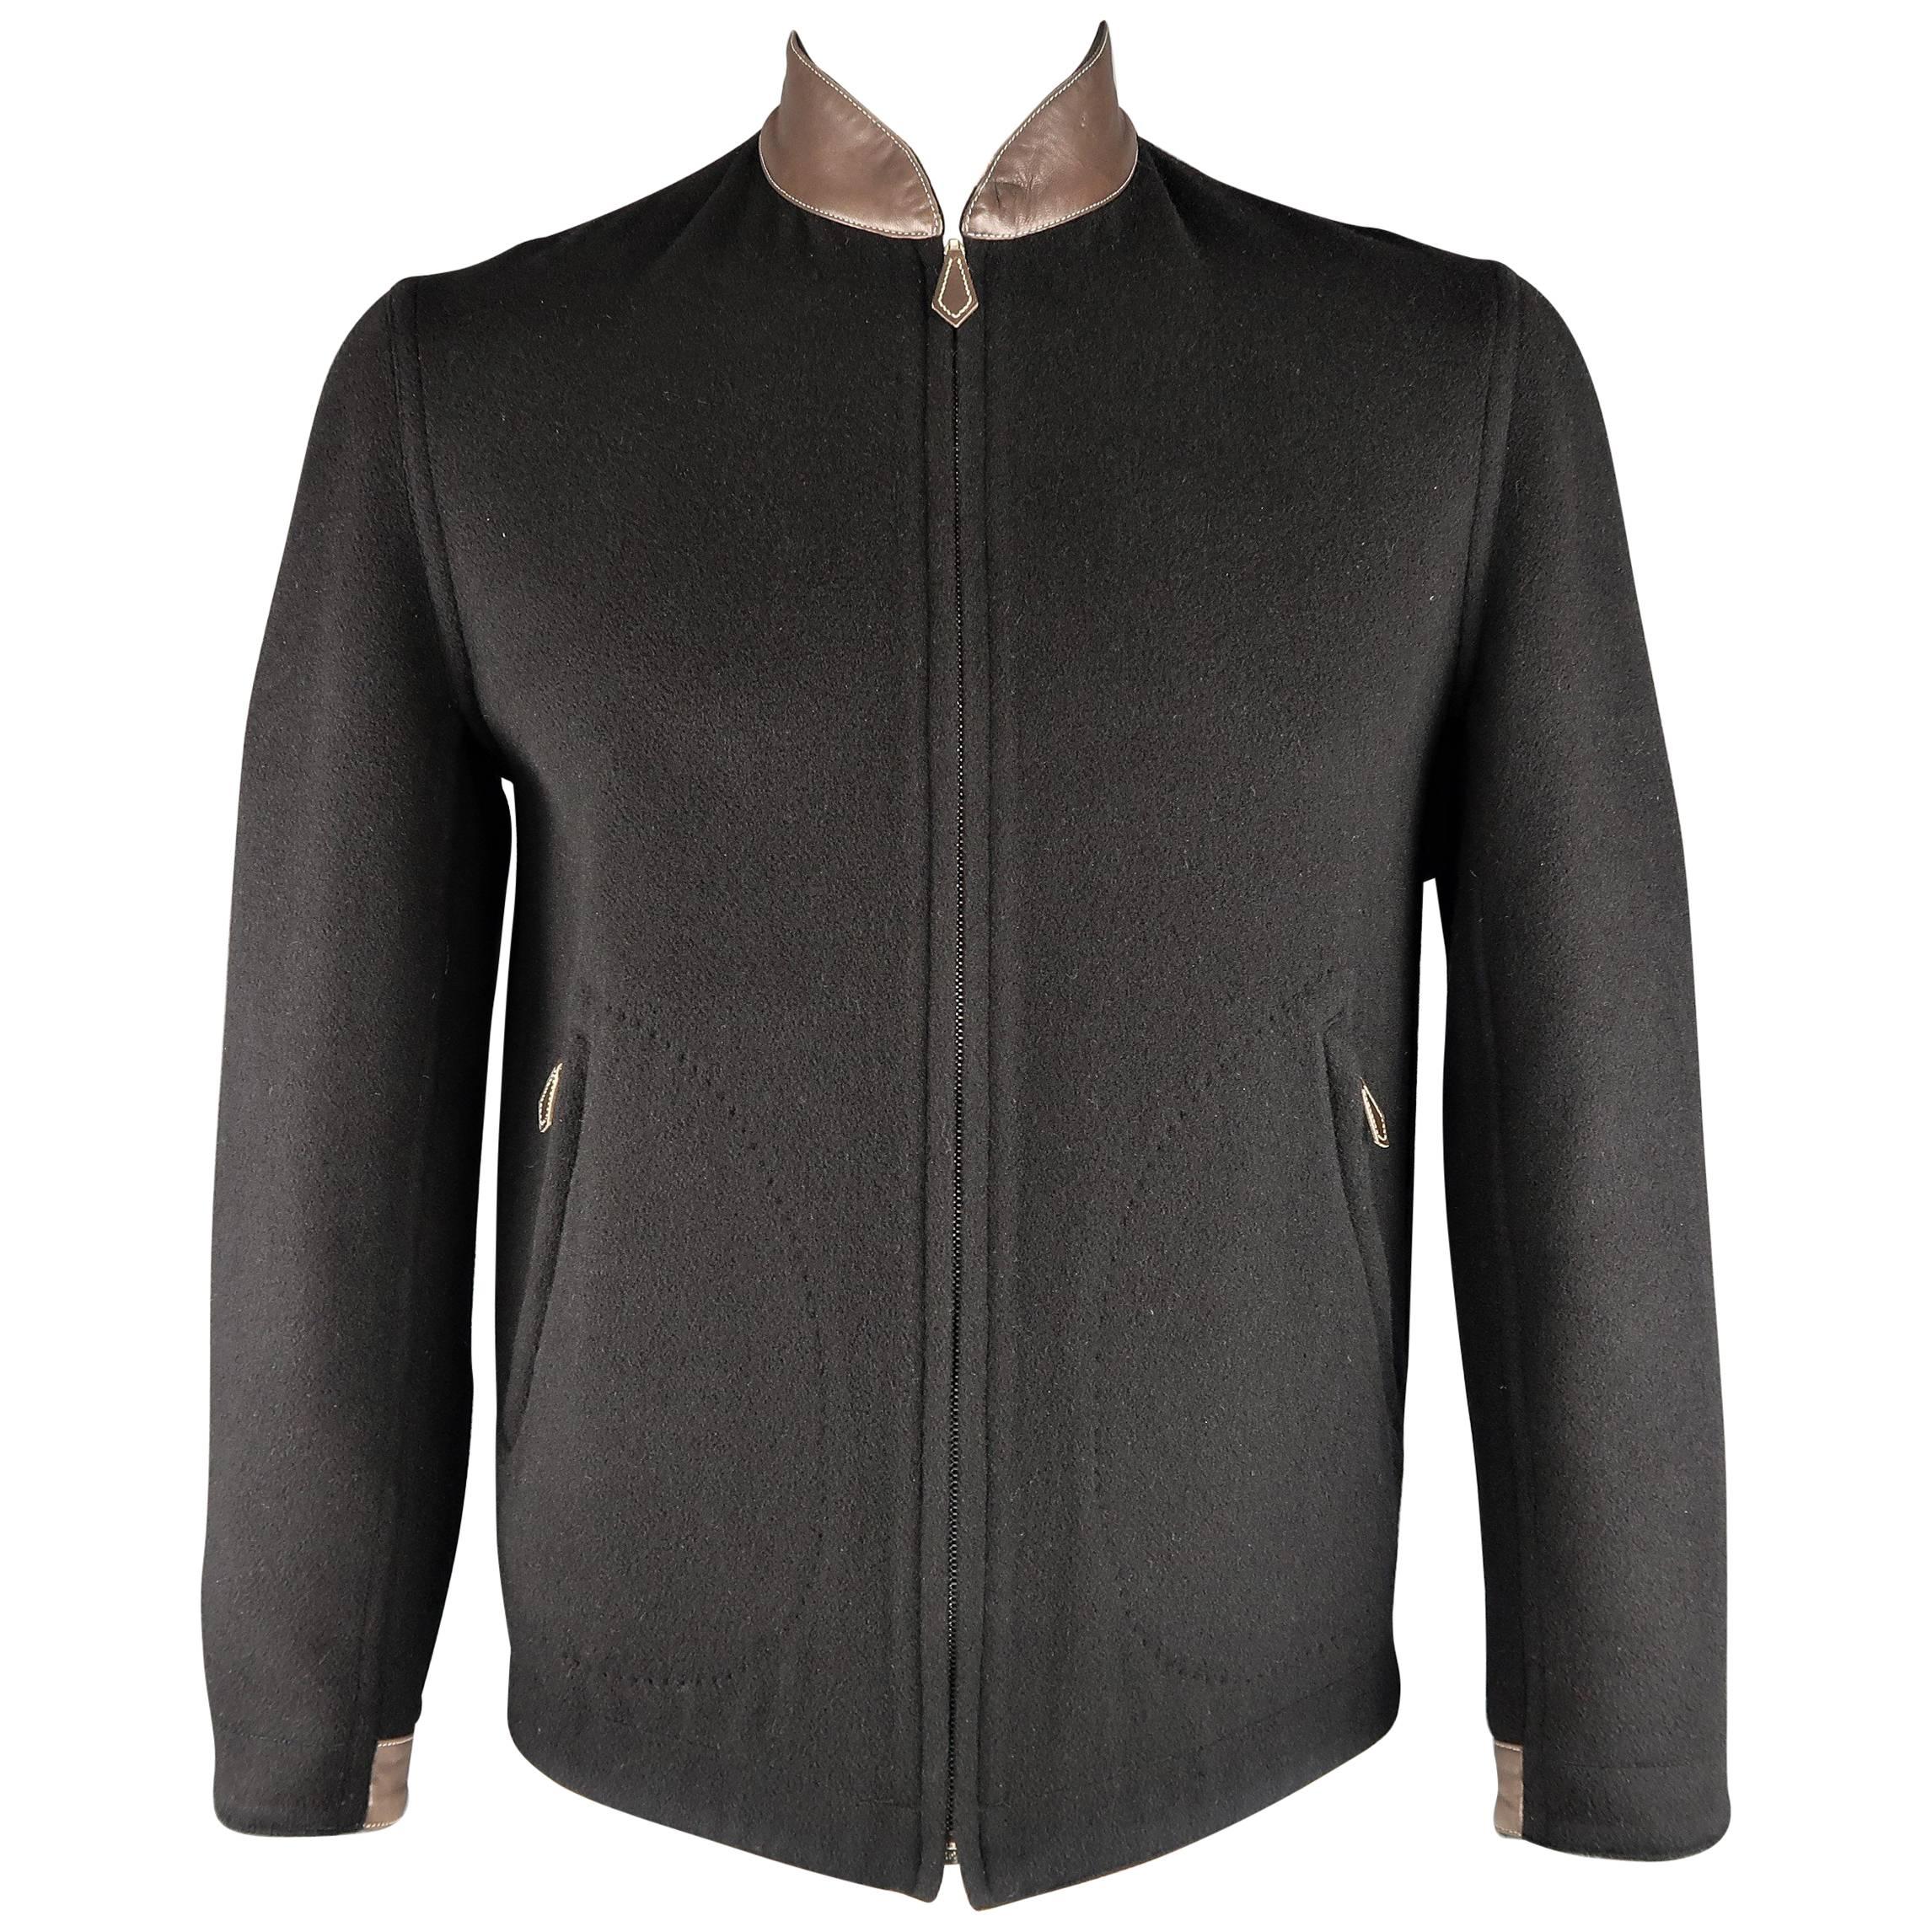 Hermes Men's Black Cashmere Leather Baseball Collar Jacket